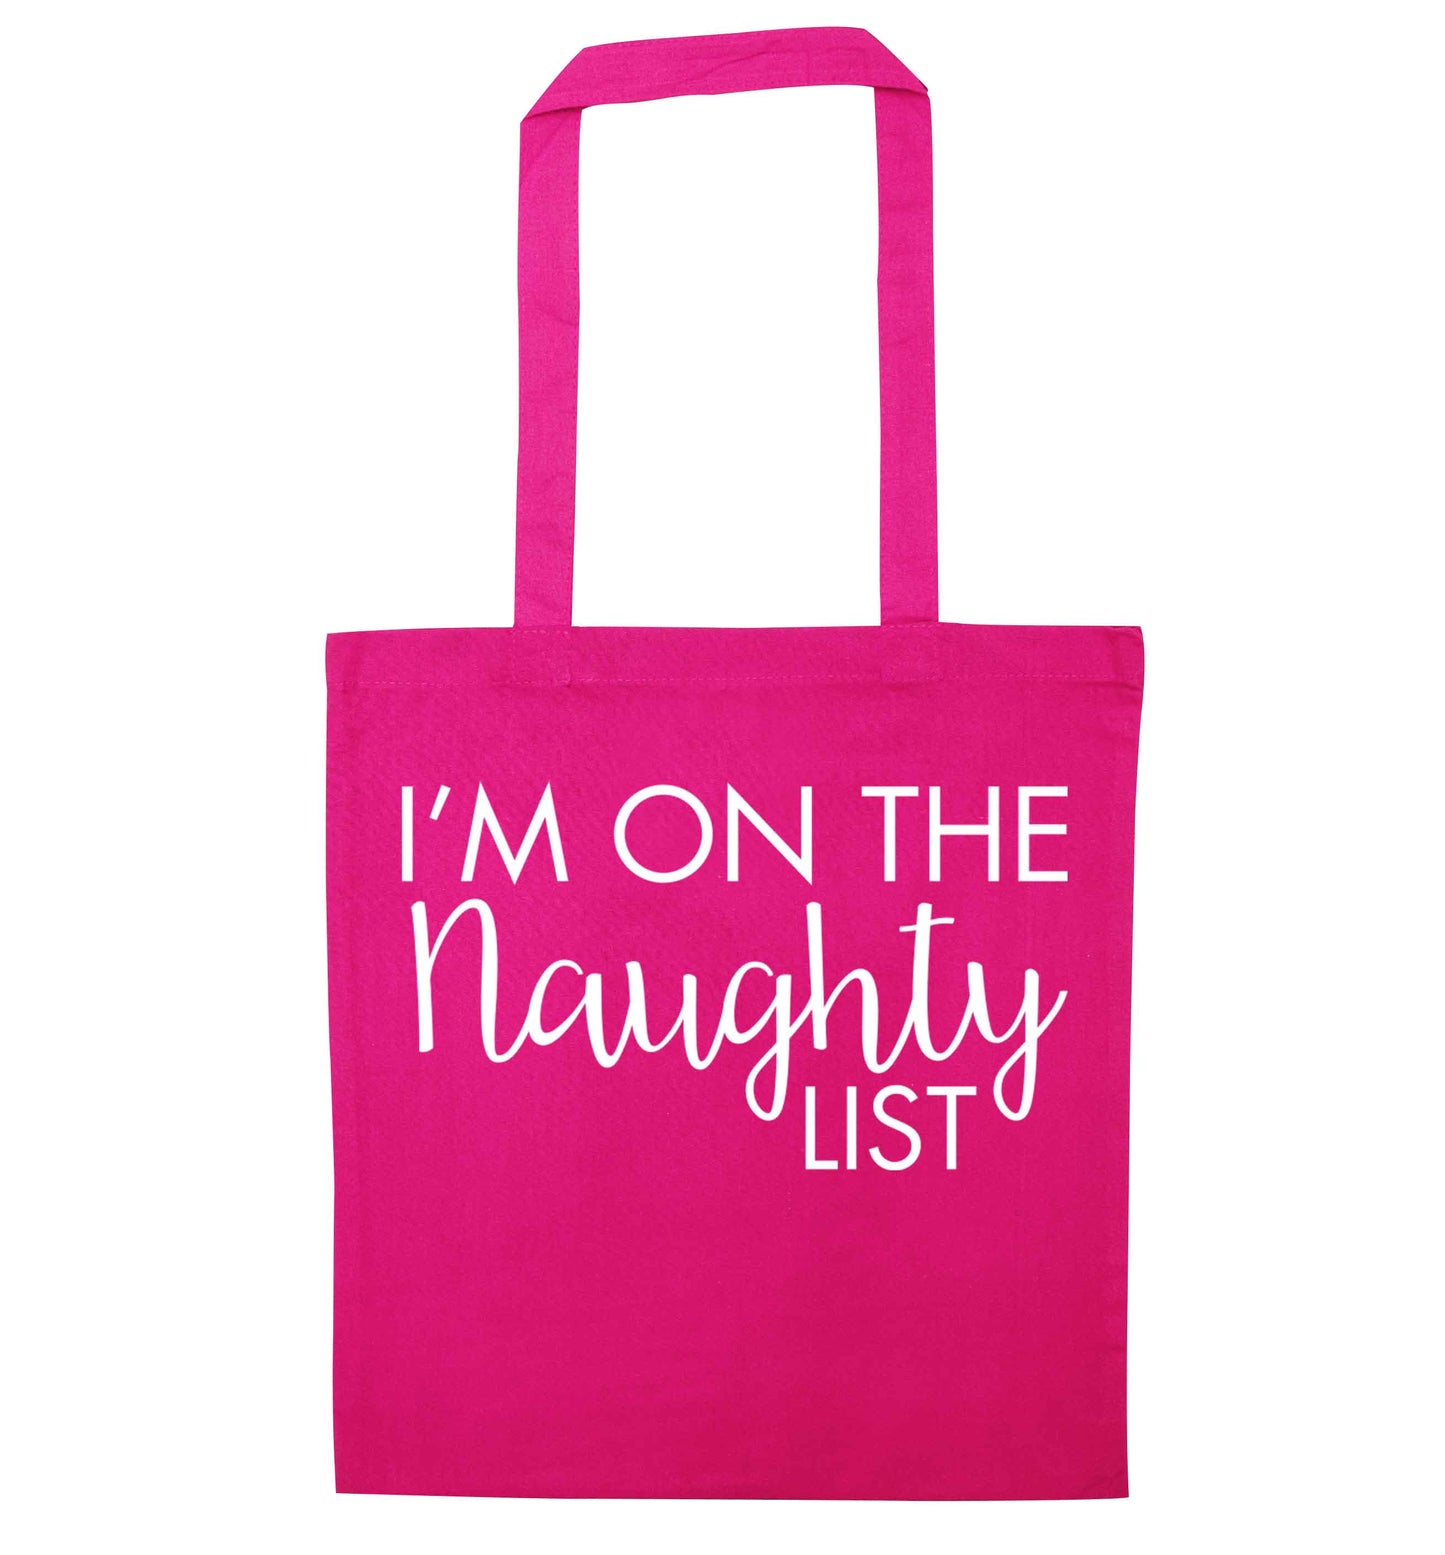 I'm on the naughty list pink tote bag